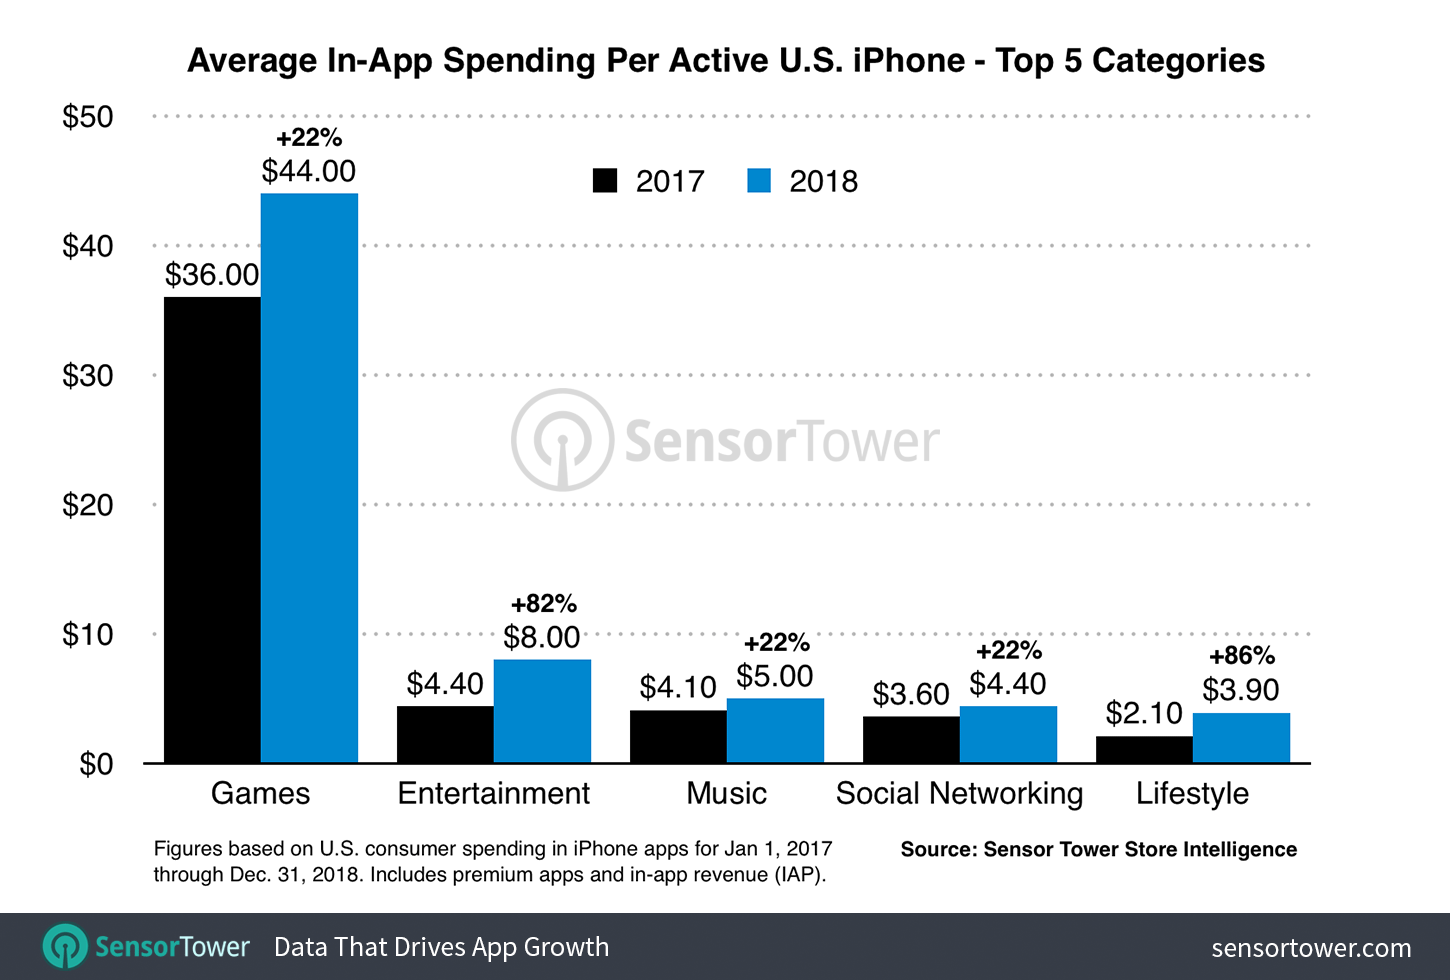 U.S. iPhone Category Revenue Per Active Device 2018 vs. 2017